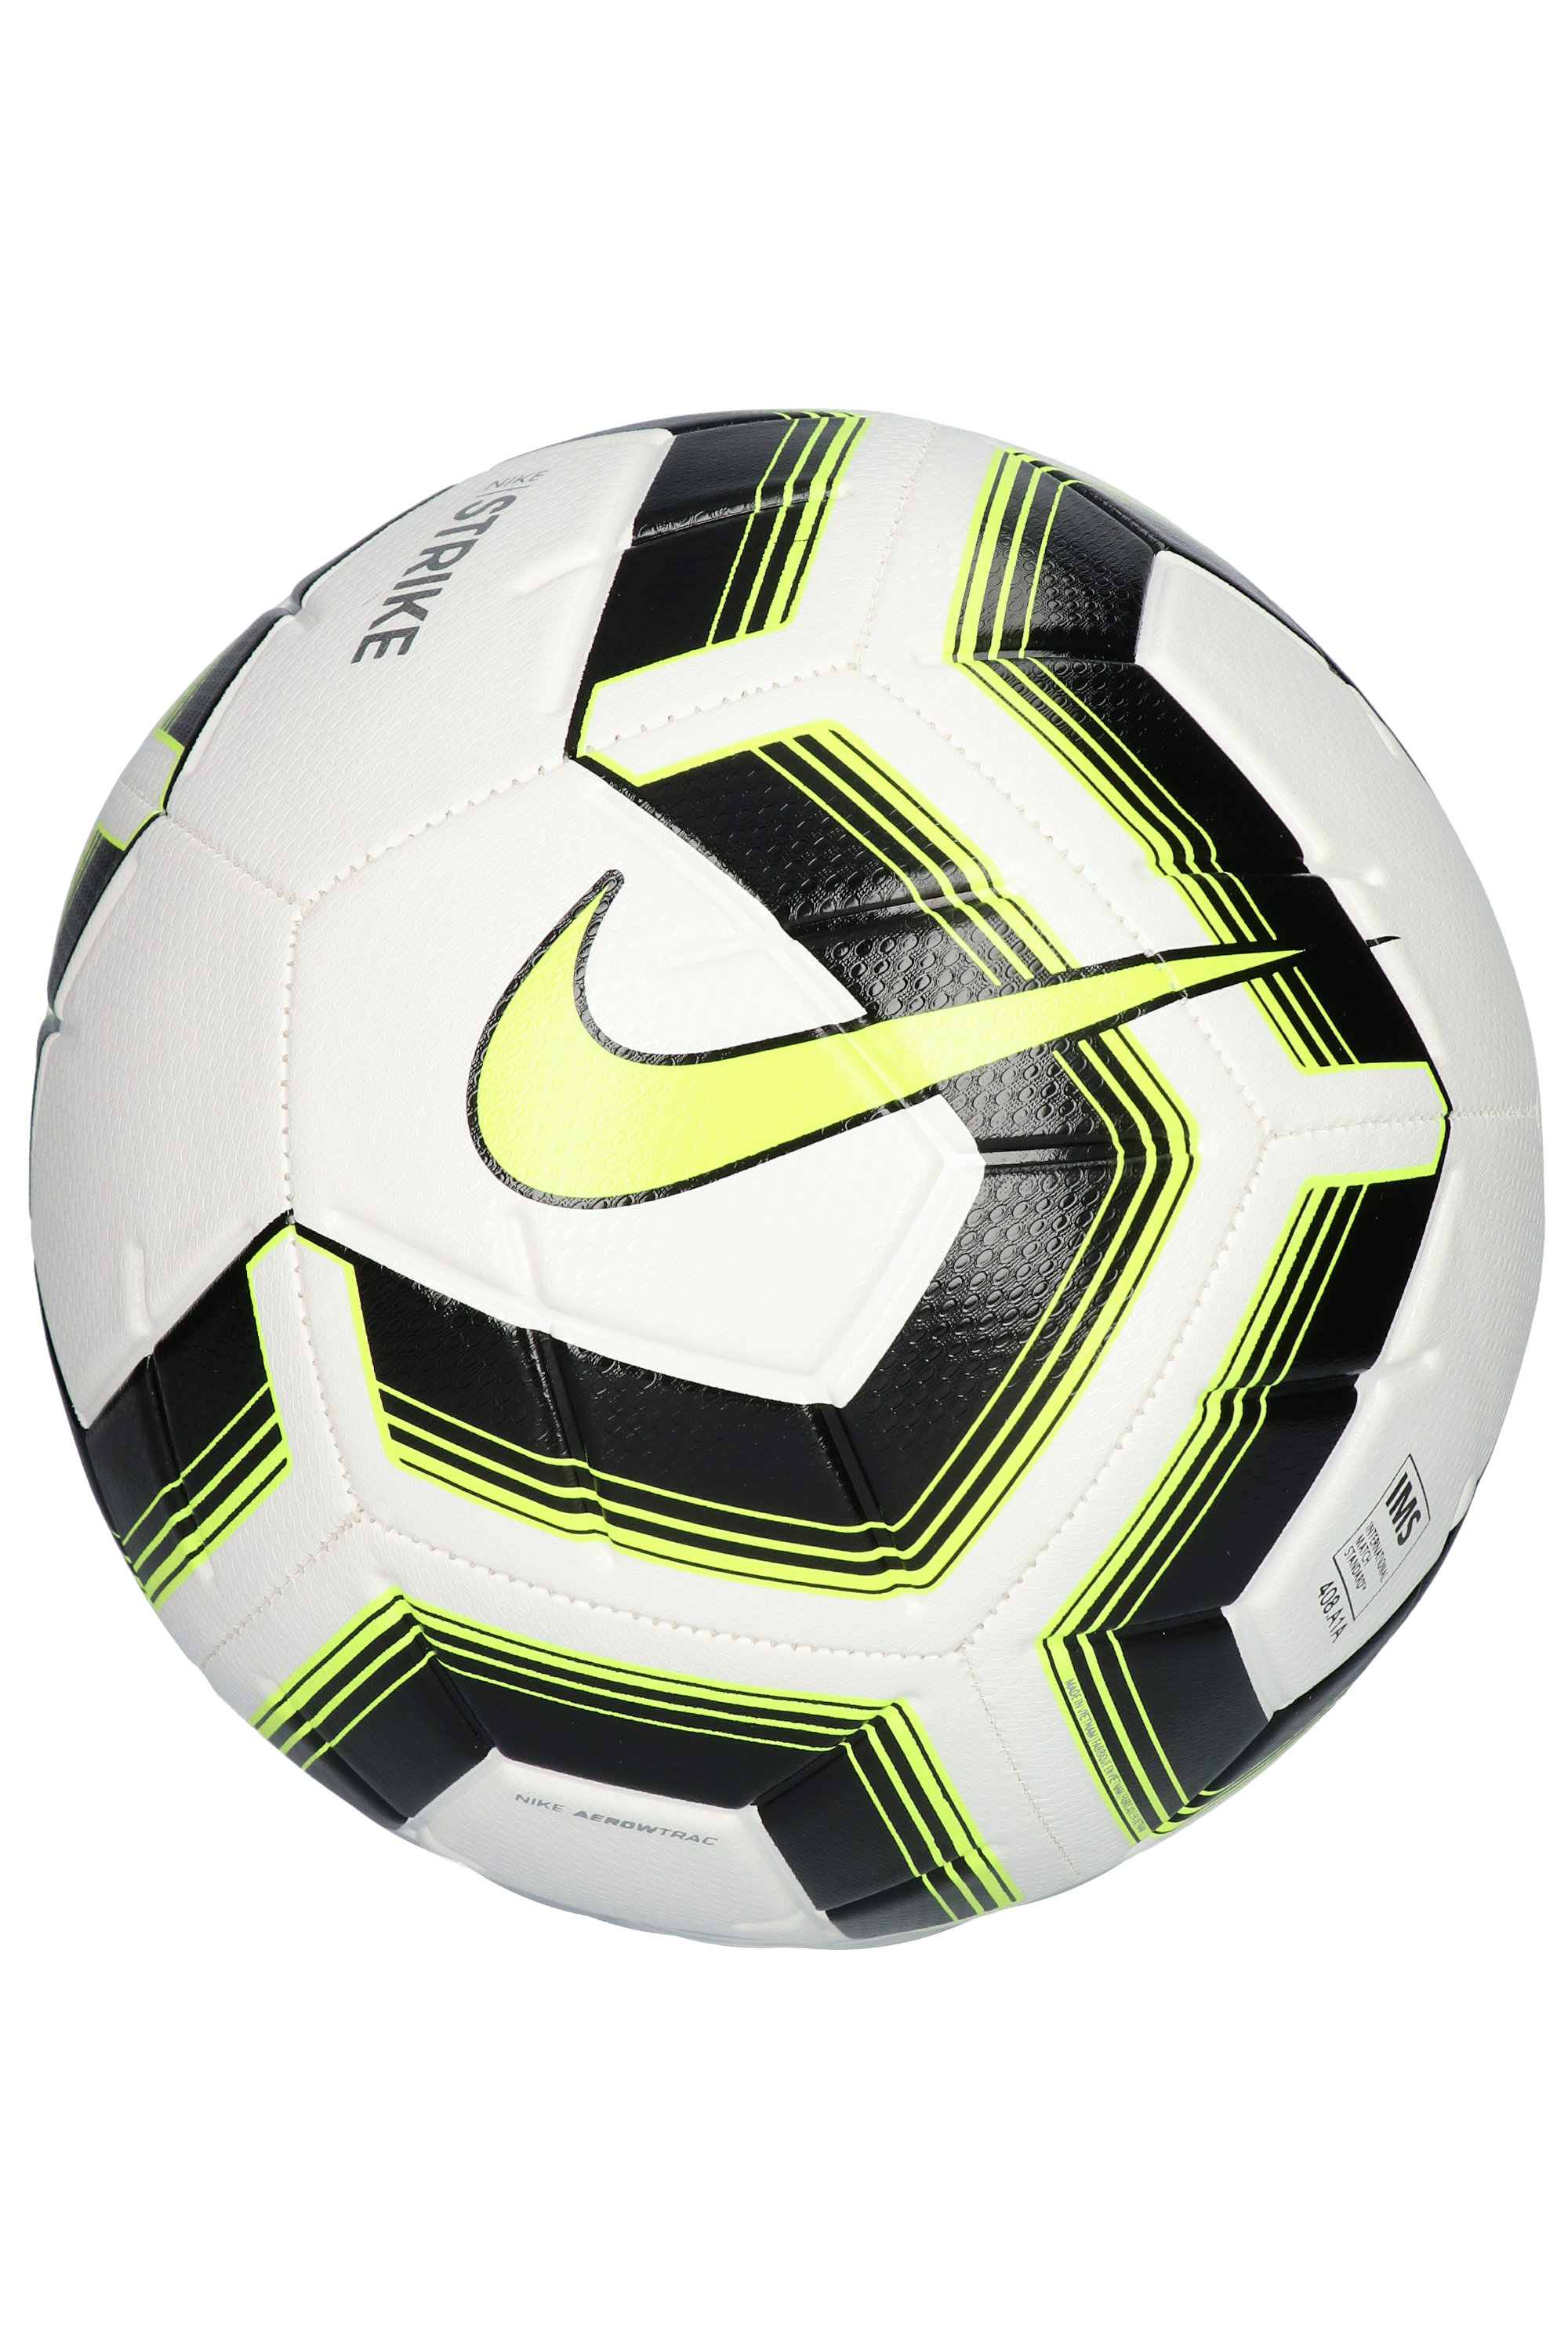 Ball Nike Strike Team IMS size 4 | R 